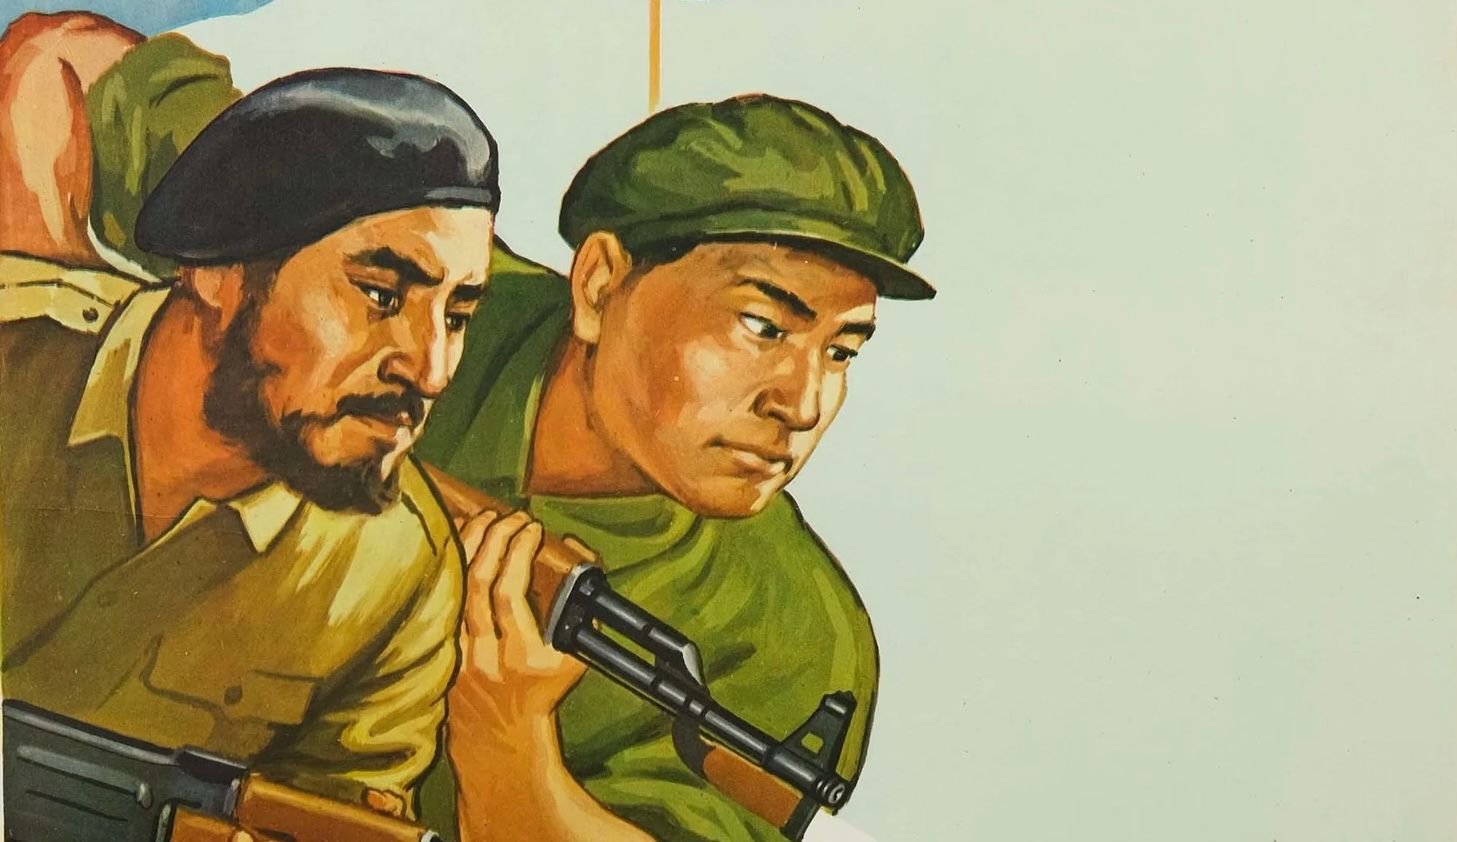 “Militant Unity and Solidarity”: Cuba, North Korea, and the Cold War